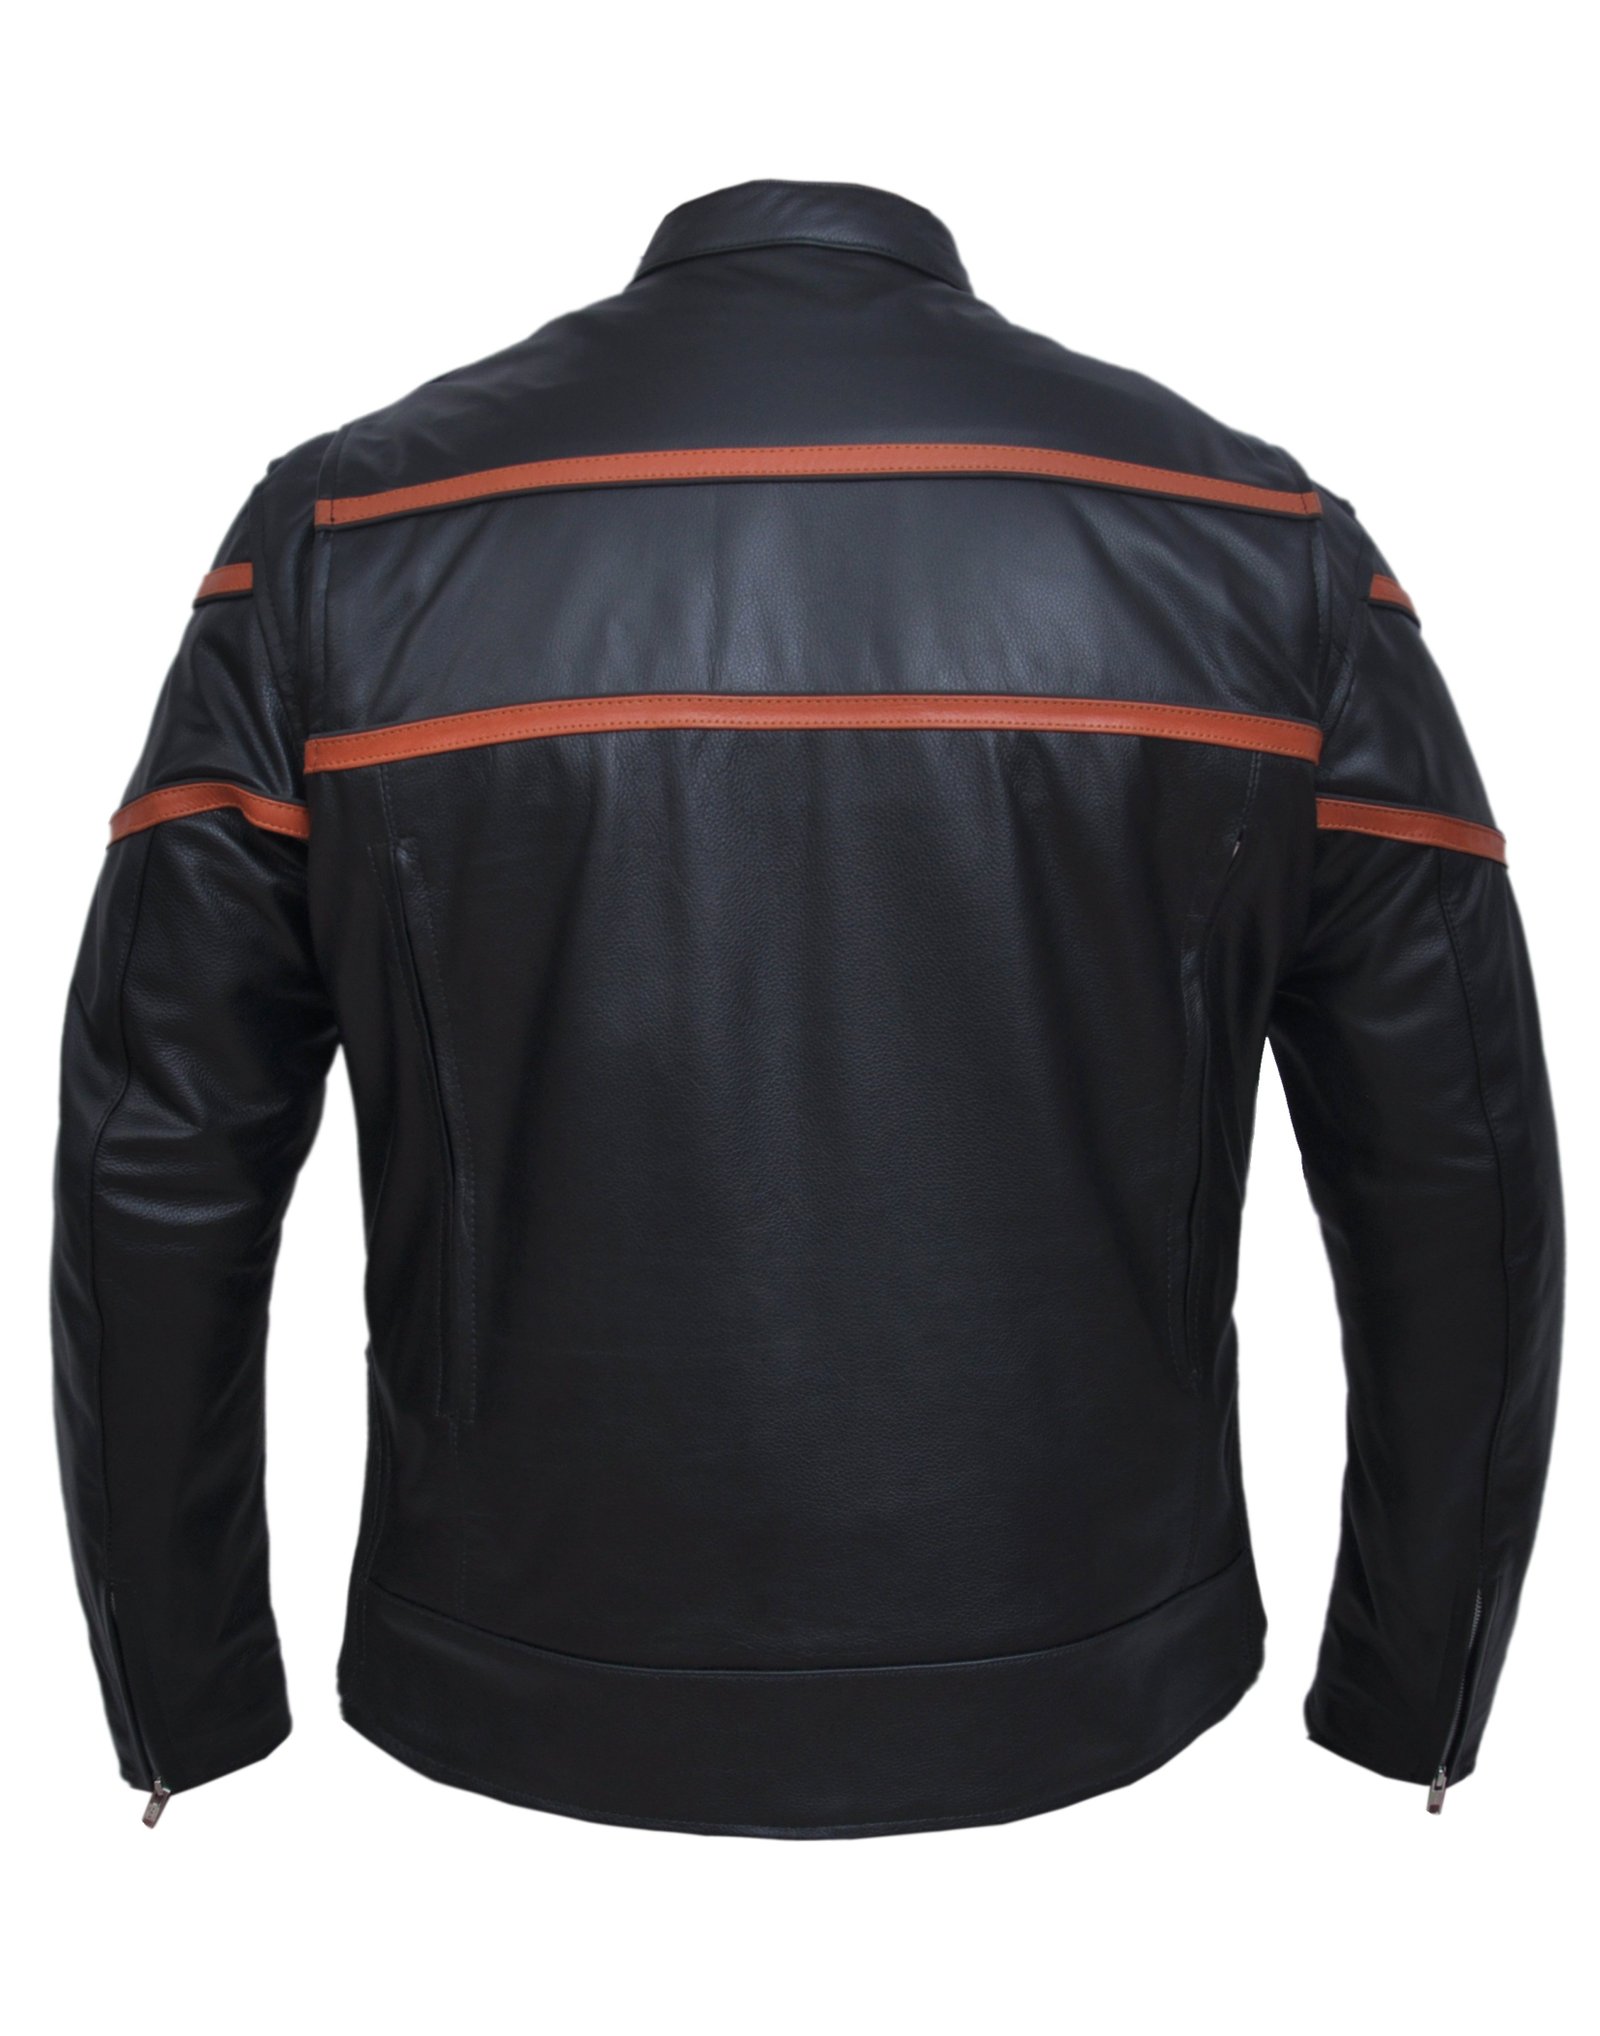 Leather Motorcycle Jacket - Men's - Lightweight - Orange - 6049-16-UN